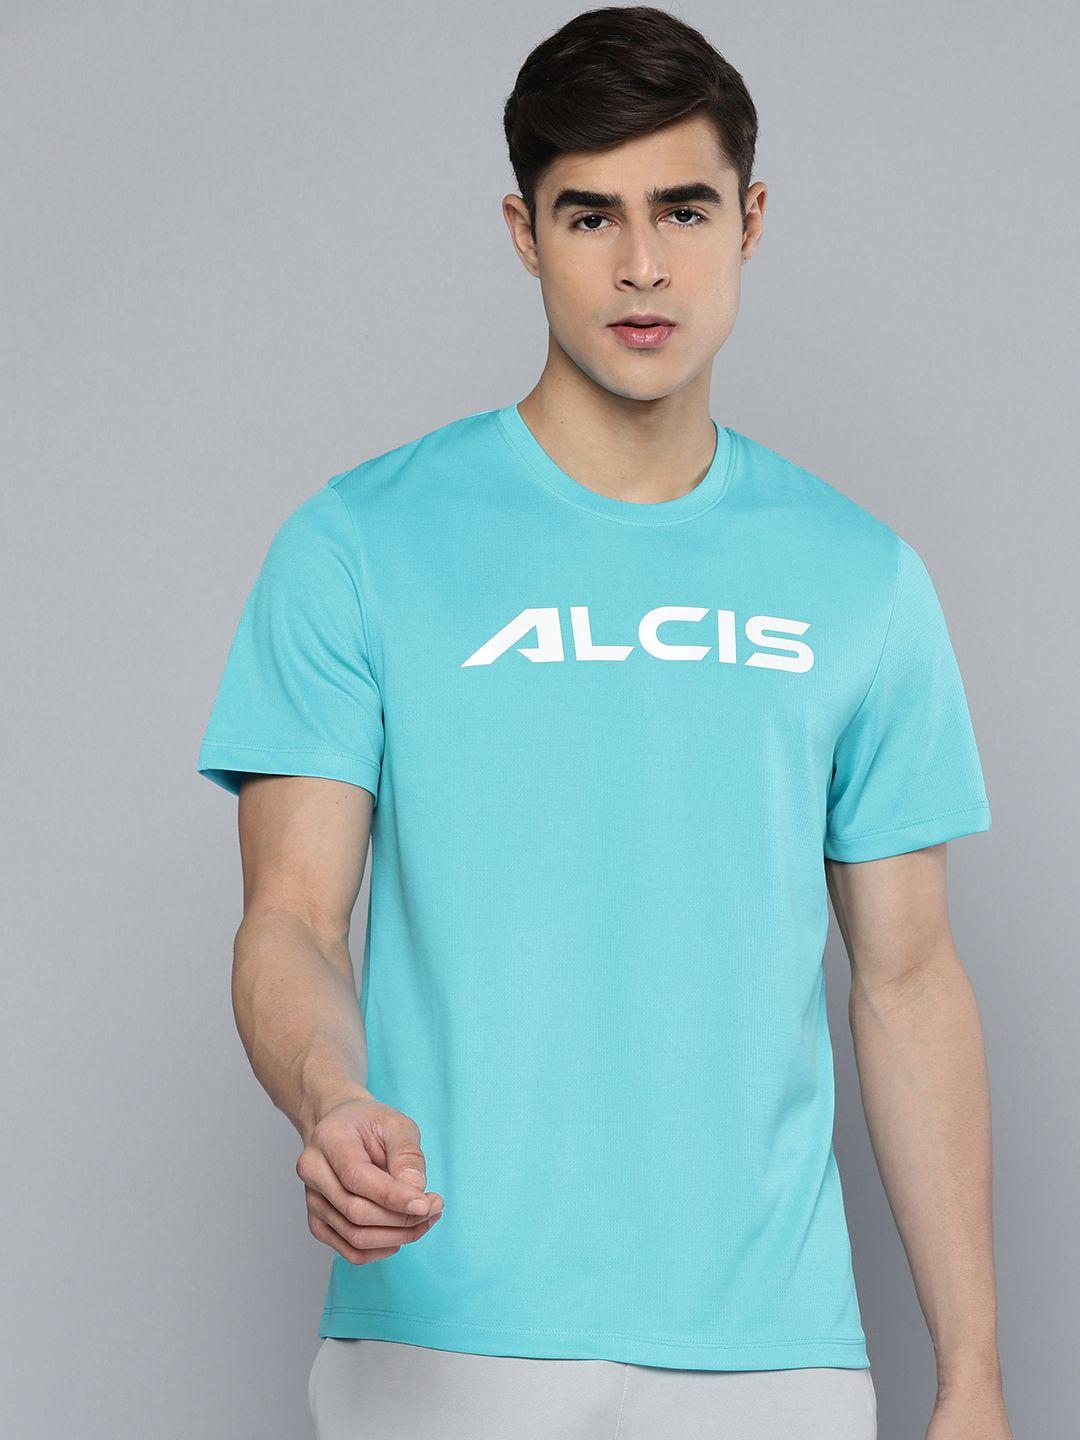 alcis-brand-logo-printed-dry-tech-t-shirt